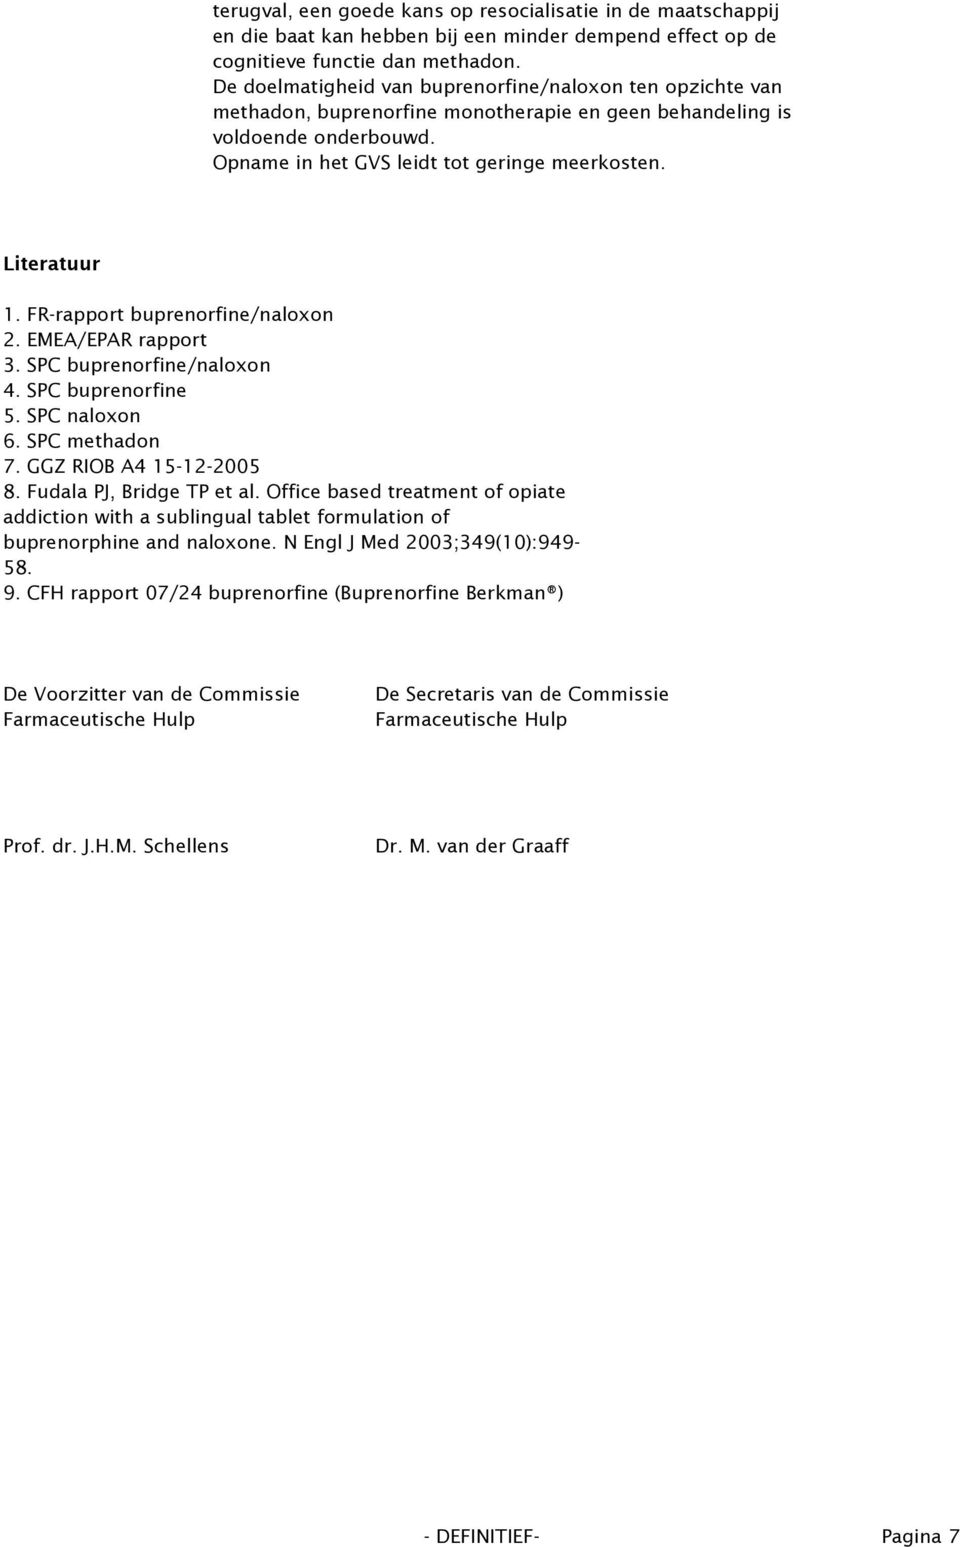 Literatuur 1. FR-rapport buprenorfine/naloxon 2. EMEA/EPAR rapport 3. SPC buprenorfine/naloxon 4. SPC buprenorfine 5. SPC naloxon 6. SPC methadon 7. GGZ RIOB A4 15-12-2005 8.